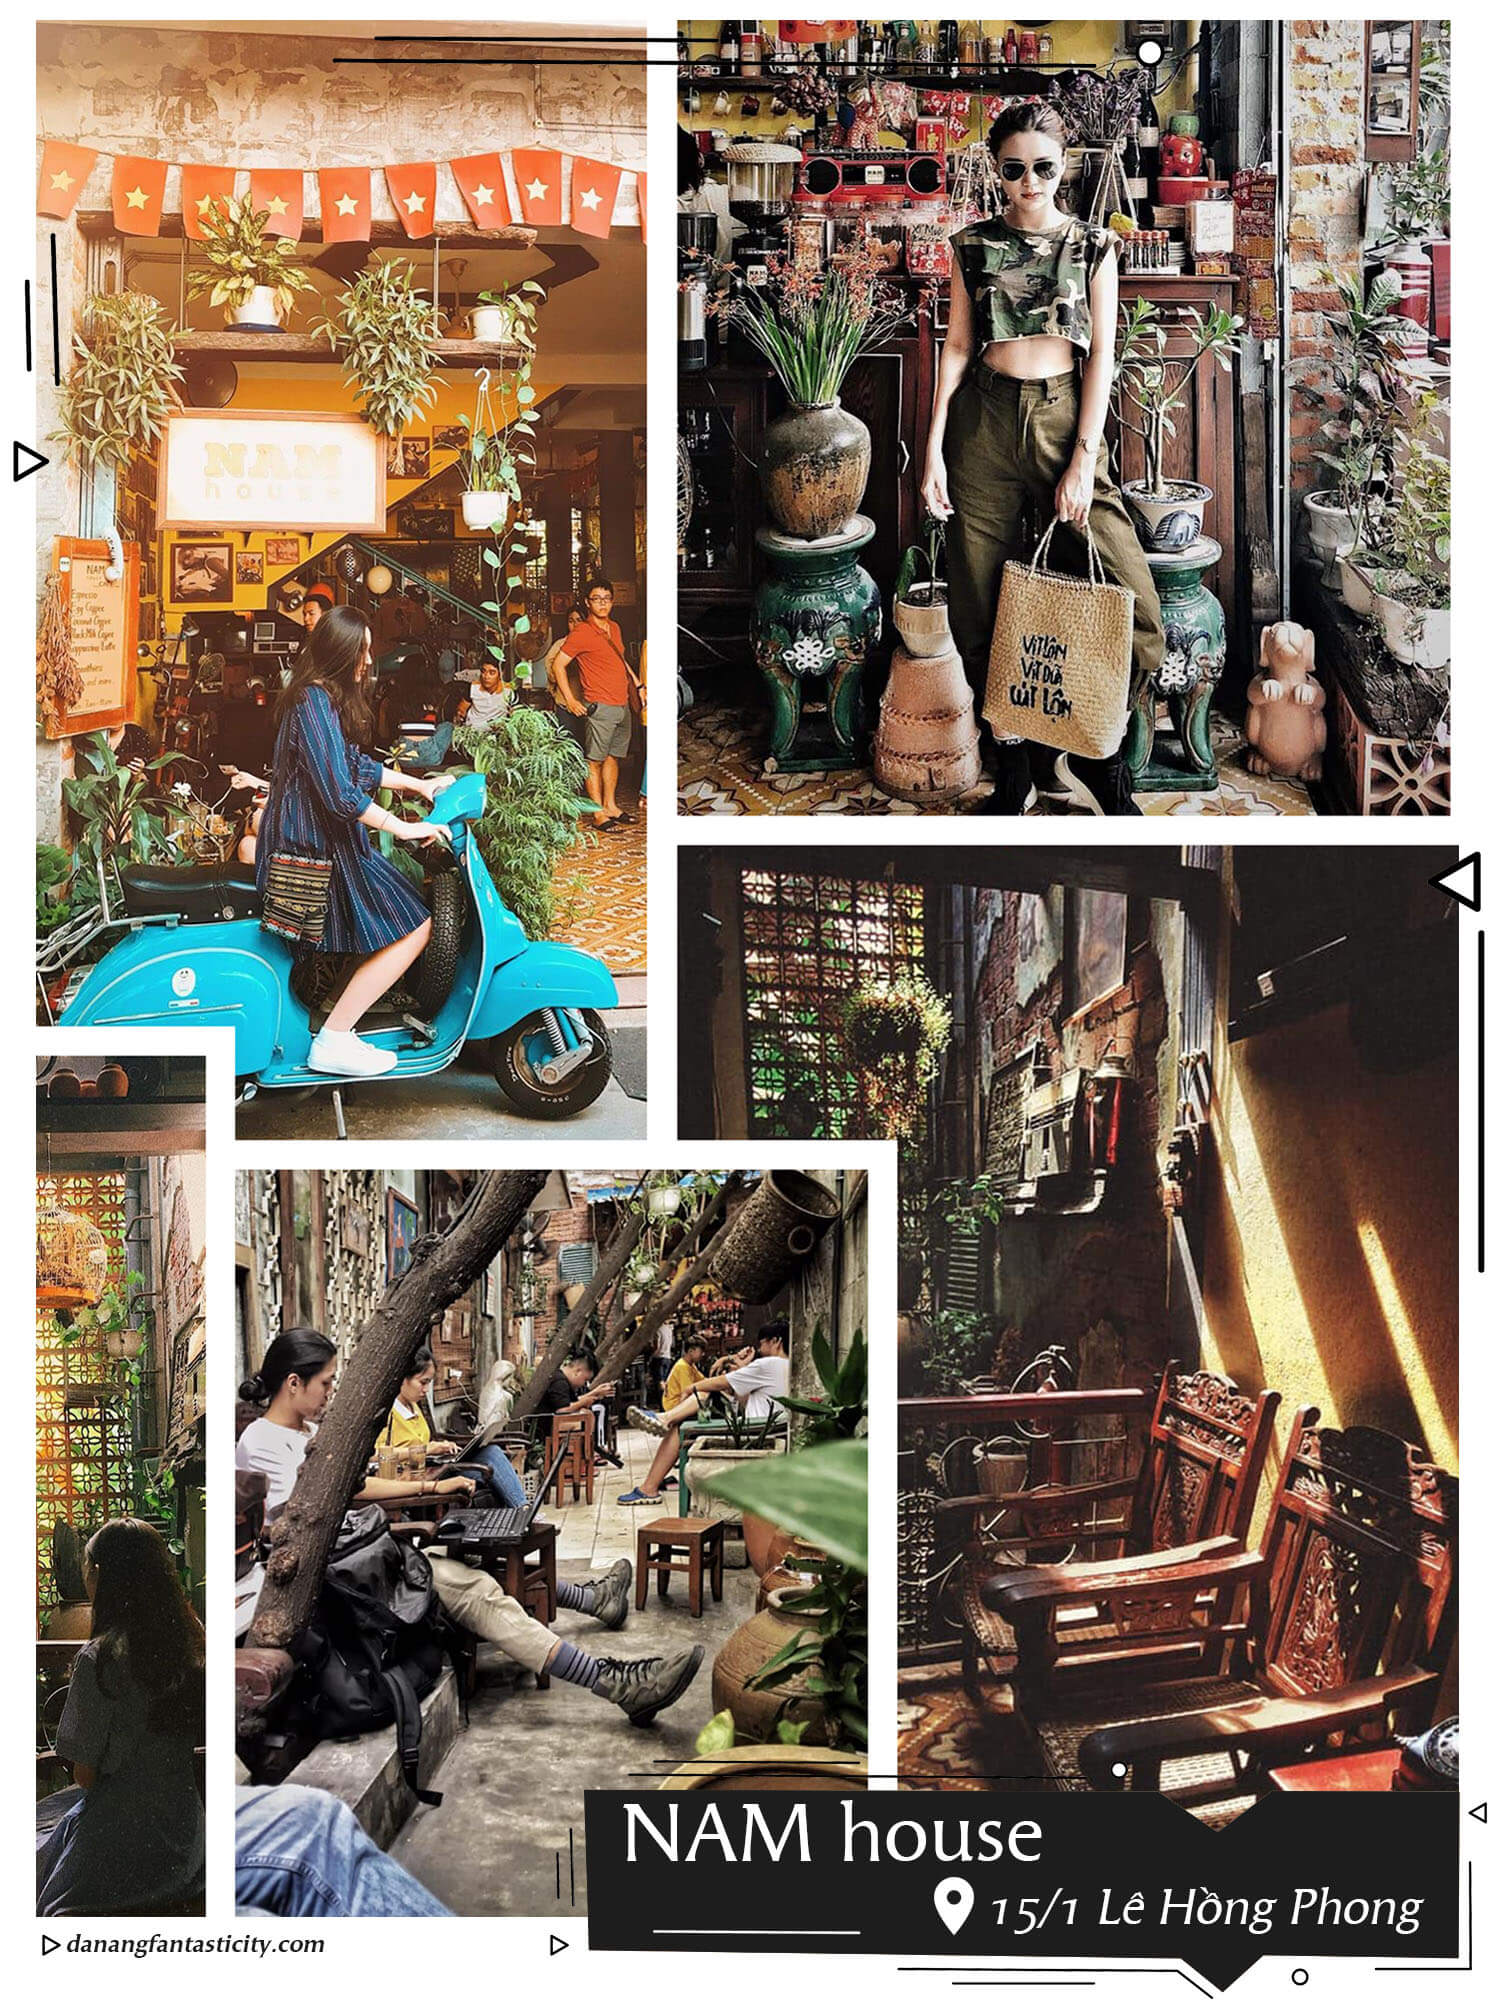 Nam House 17 1 Le Hong Phong Nhung Tiem Cafe Nhat Dinh Phai Ghe Tai Da Nang Fantasticity Com